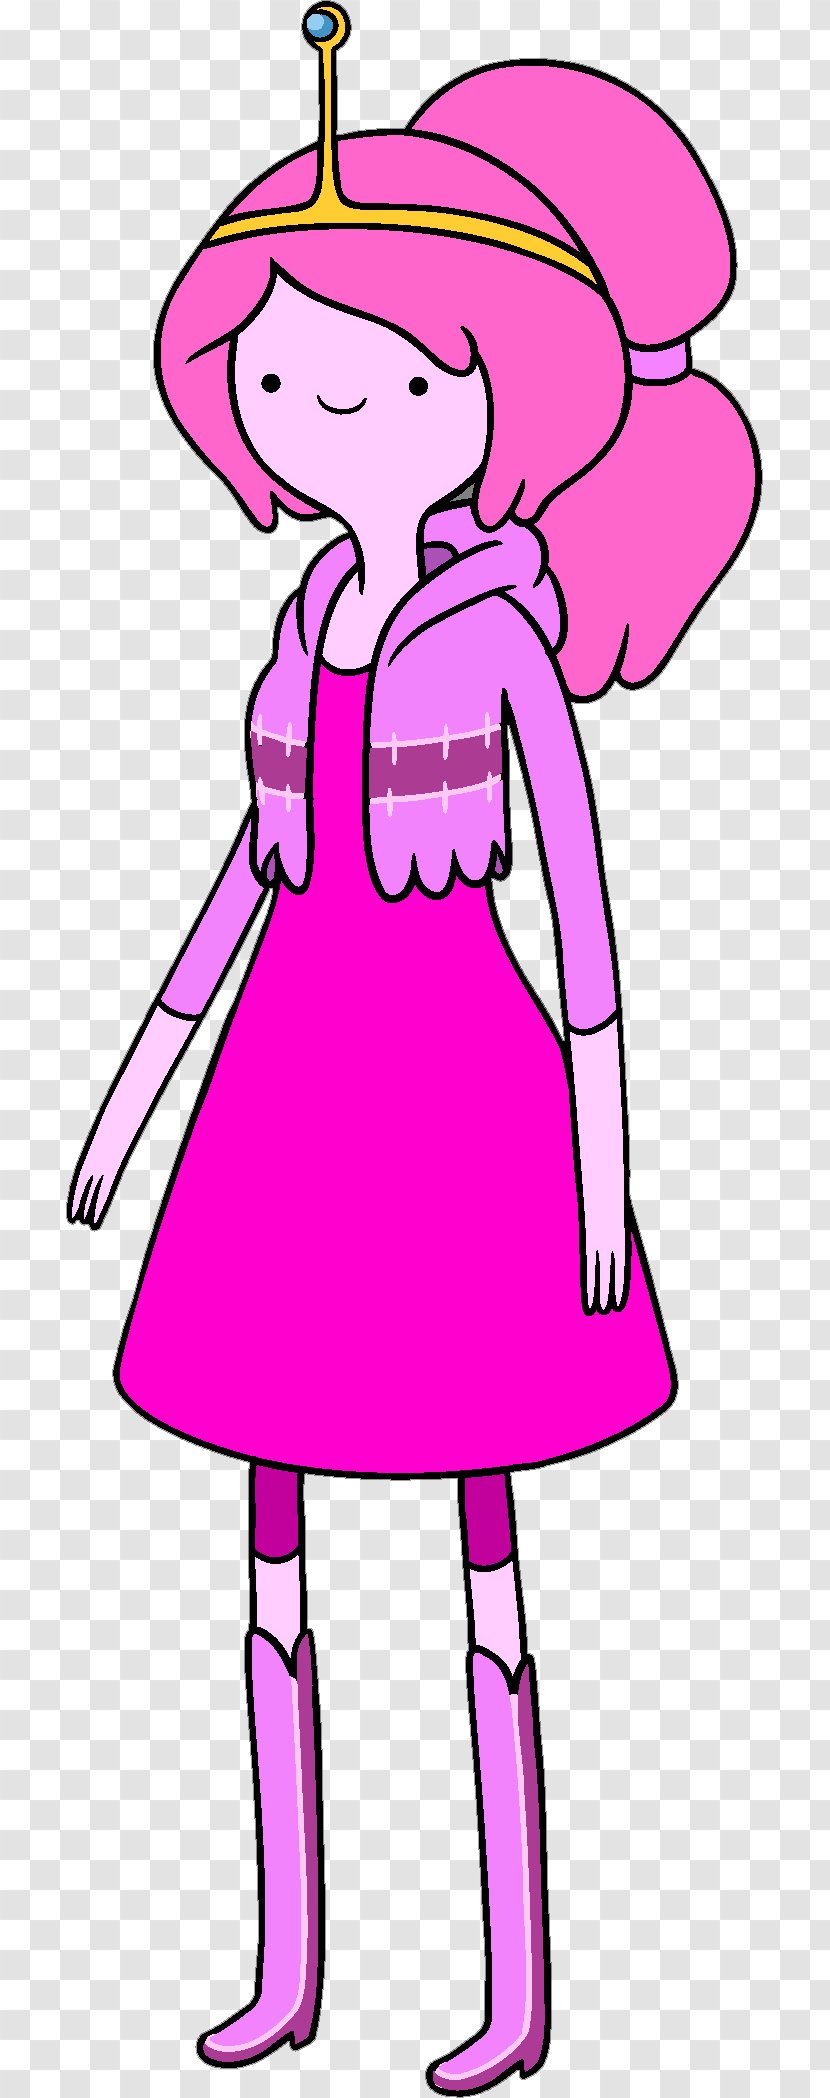 Marceline The Vampire Queen Ice King Chewing Gum Raven Princess Bubblegum - Silhouette - Adventure Time Transparent PNG